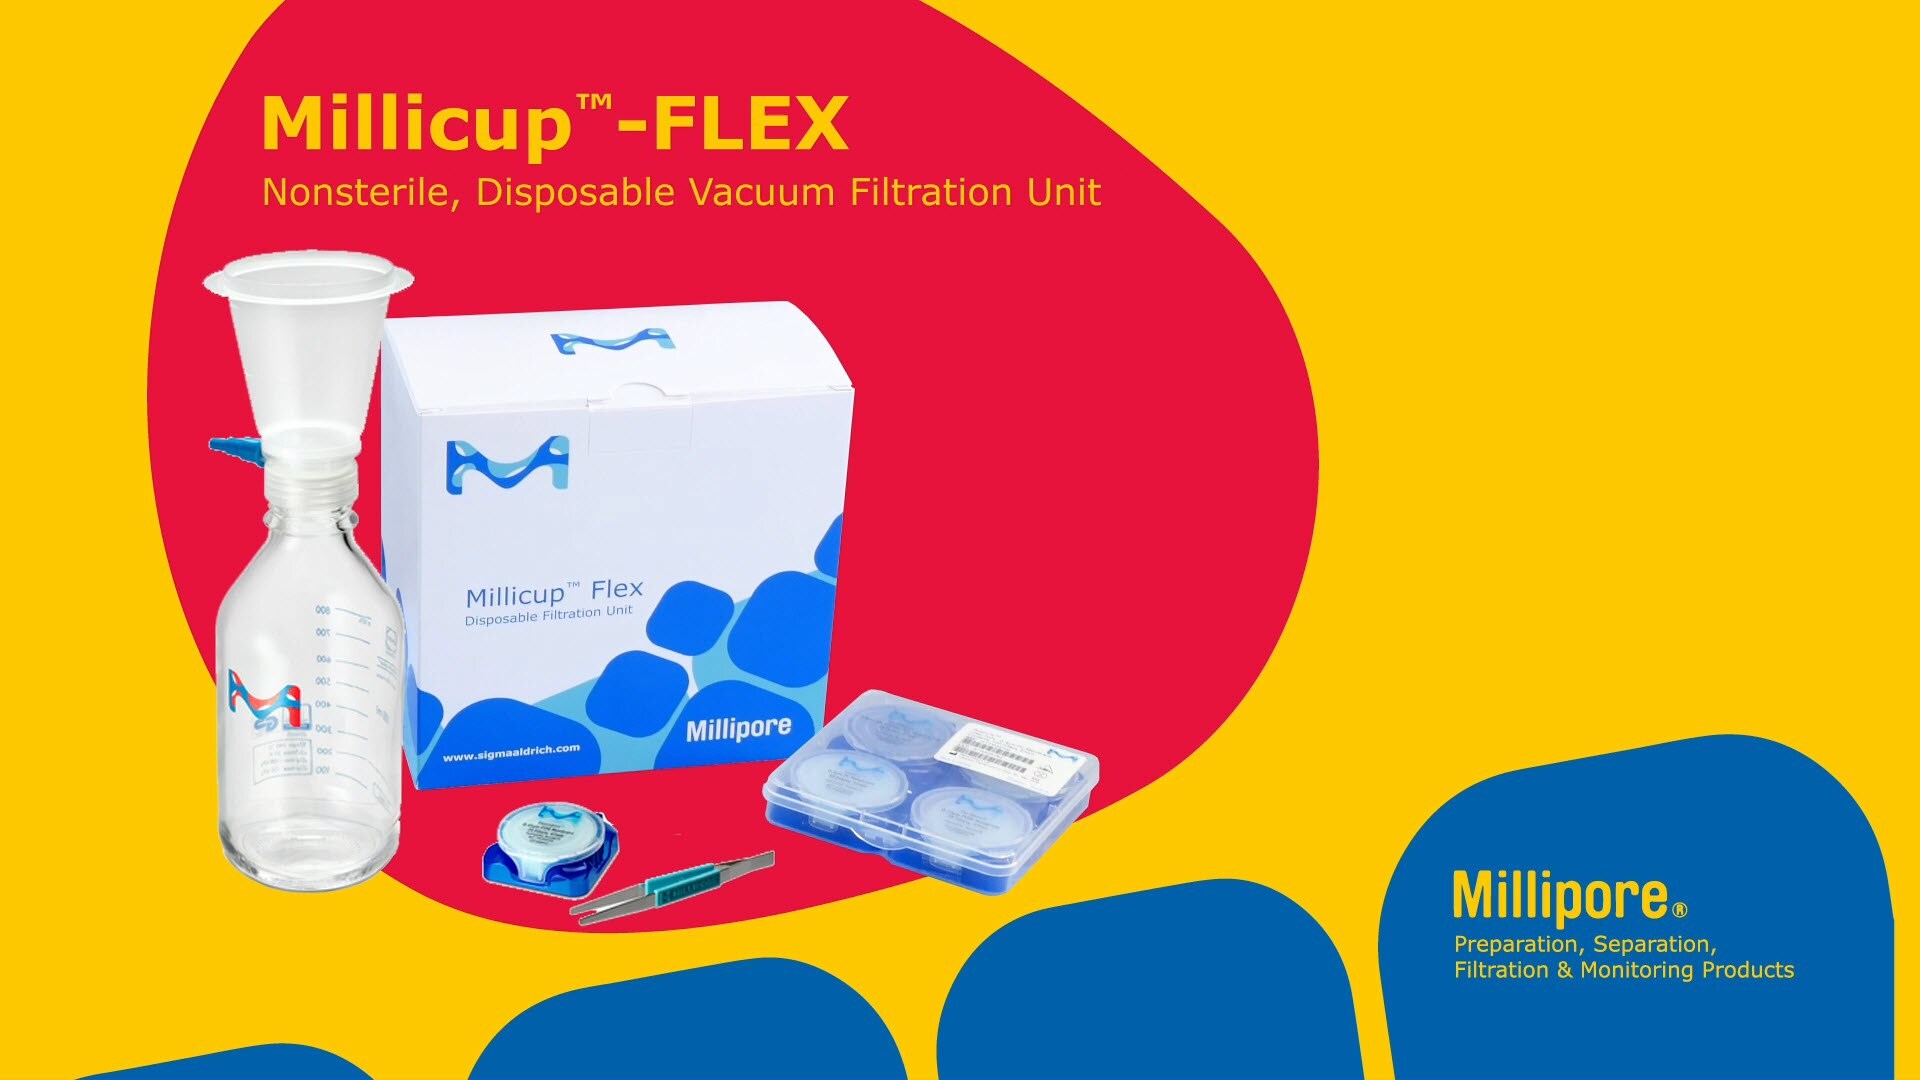 Retentate Filtration with Millicup™-FLEX Disposable Vacuum Filtration Units